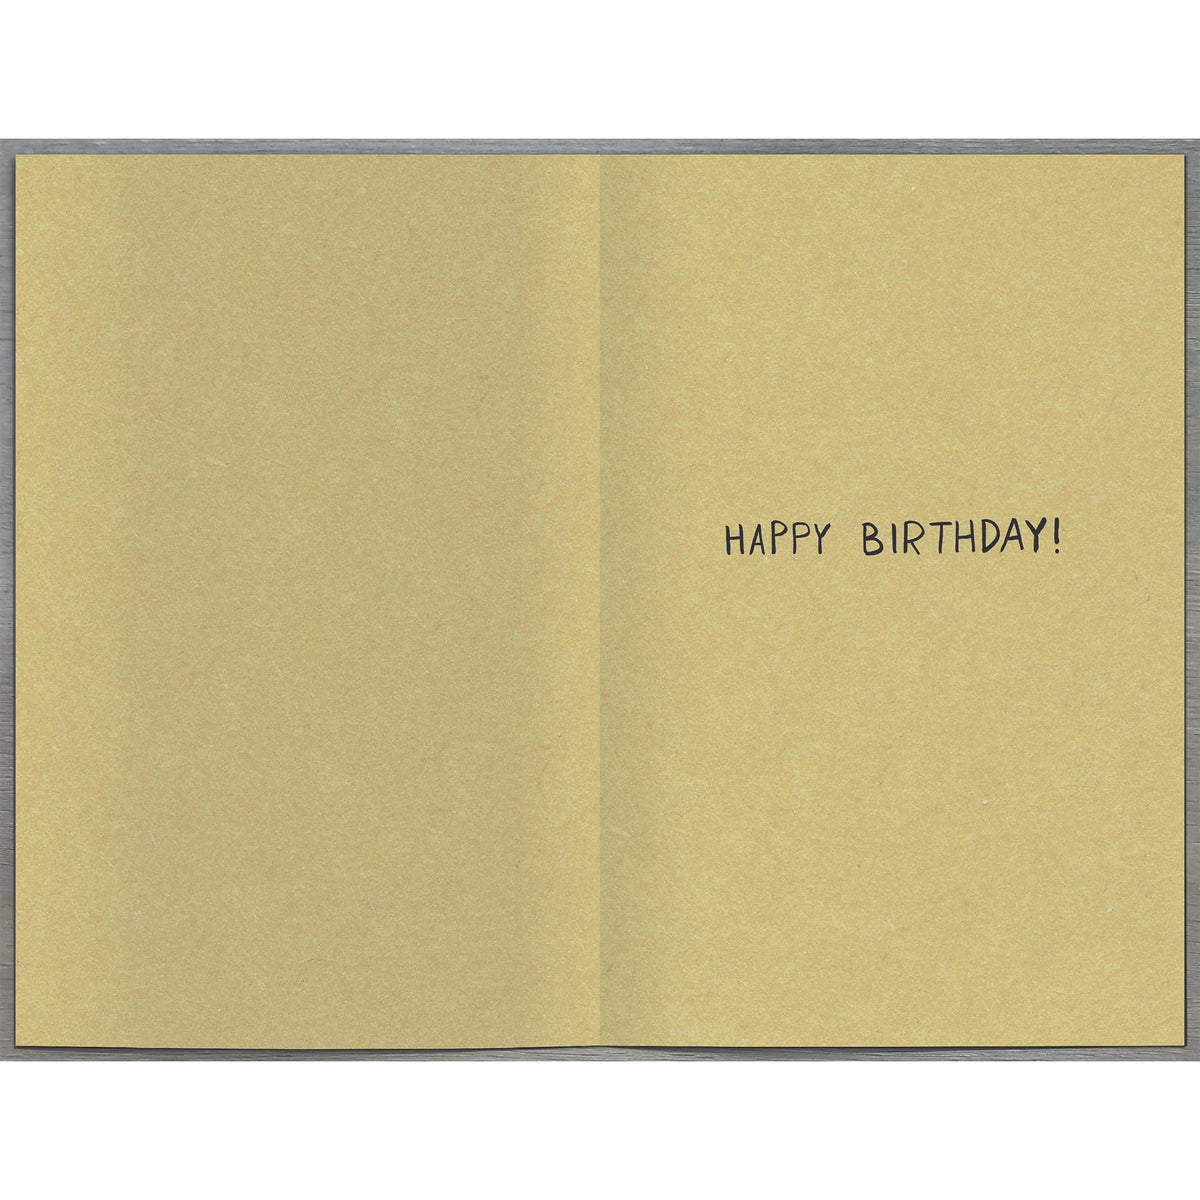 Adult-ish Humour Birthday Greetings Card